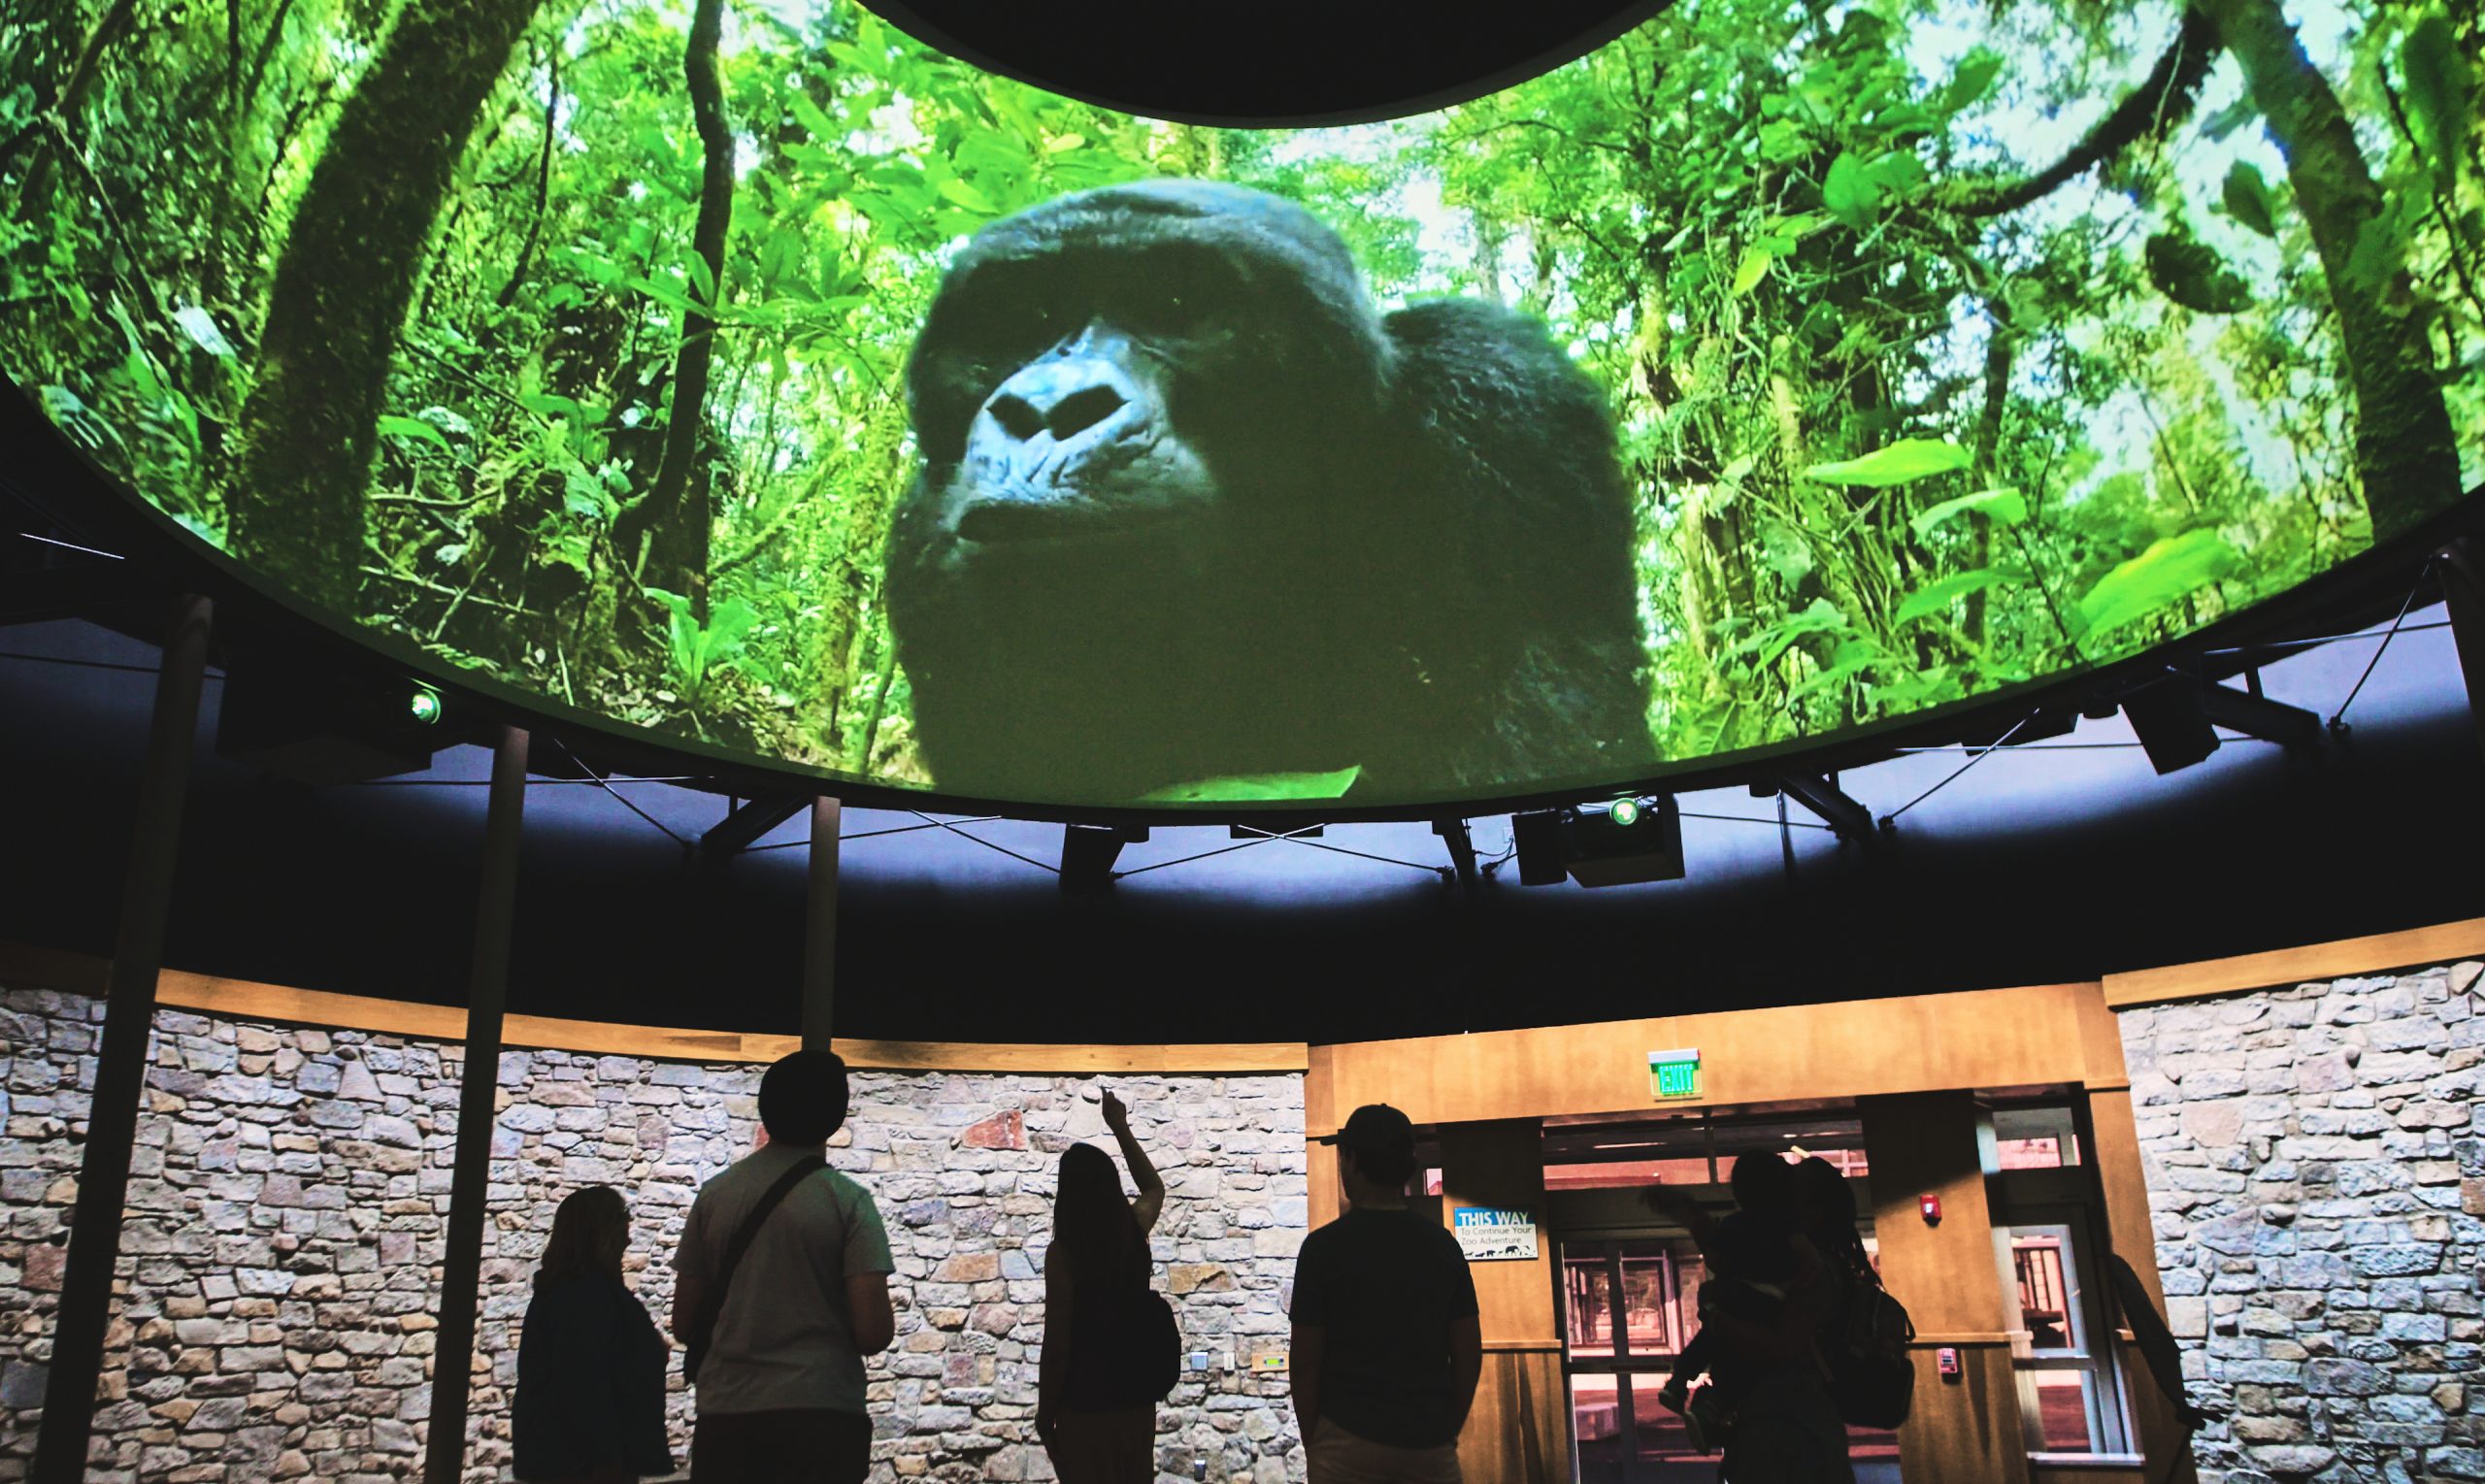 Our Living Planet - Elumenati dome at Indianapolis Zoo